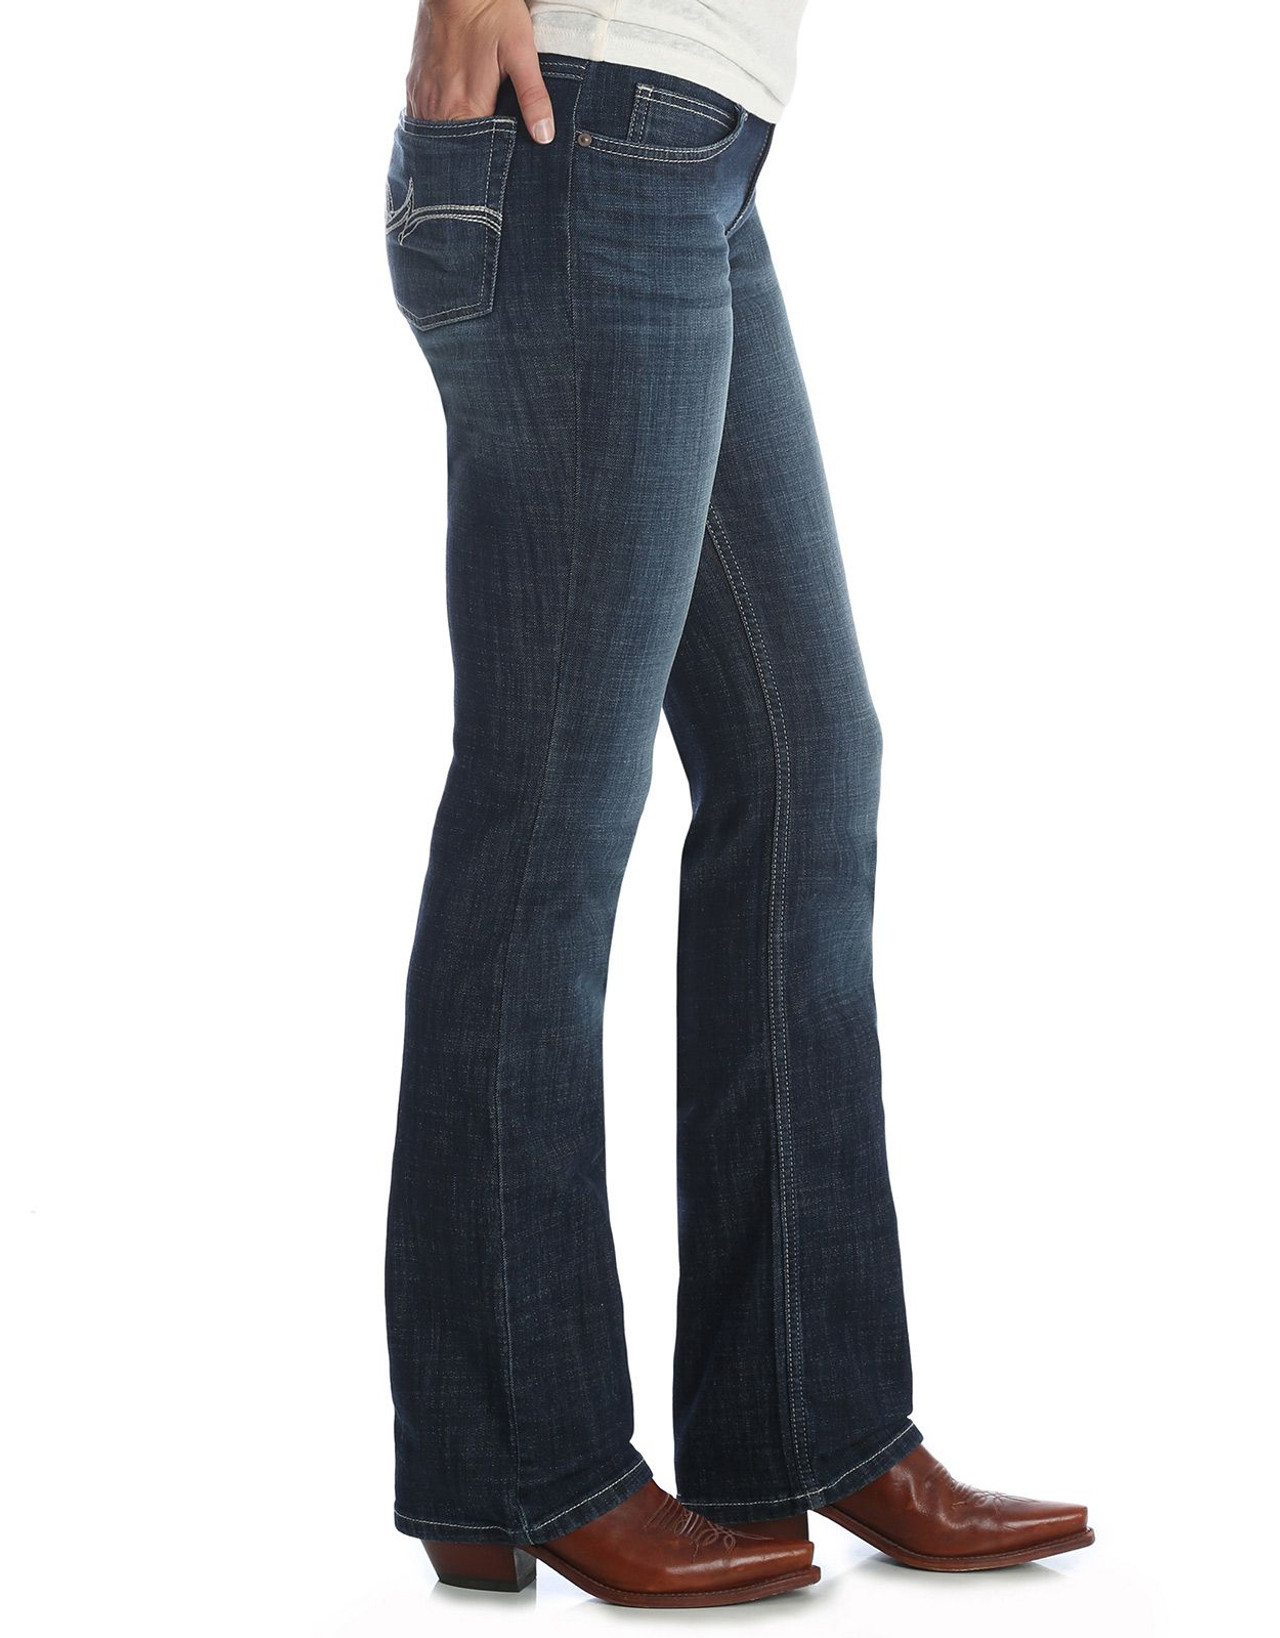 Wrangler Women's Bootcut Jeans from Langston's - Slim Fit